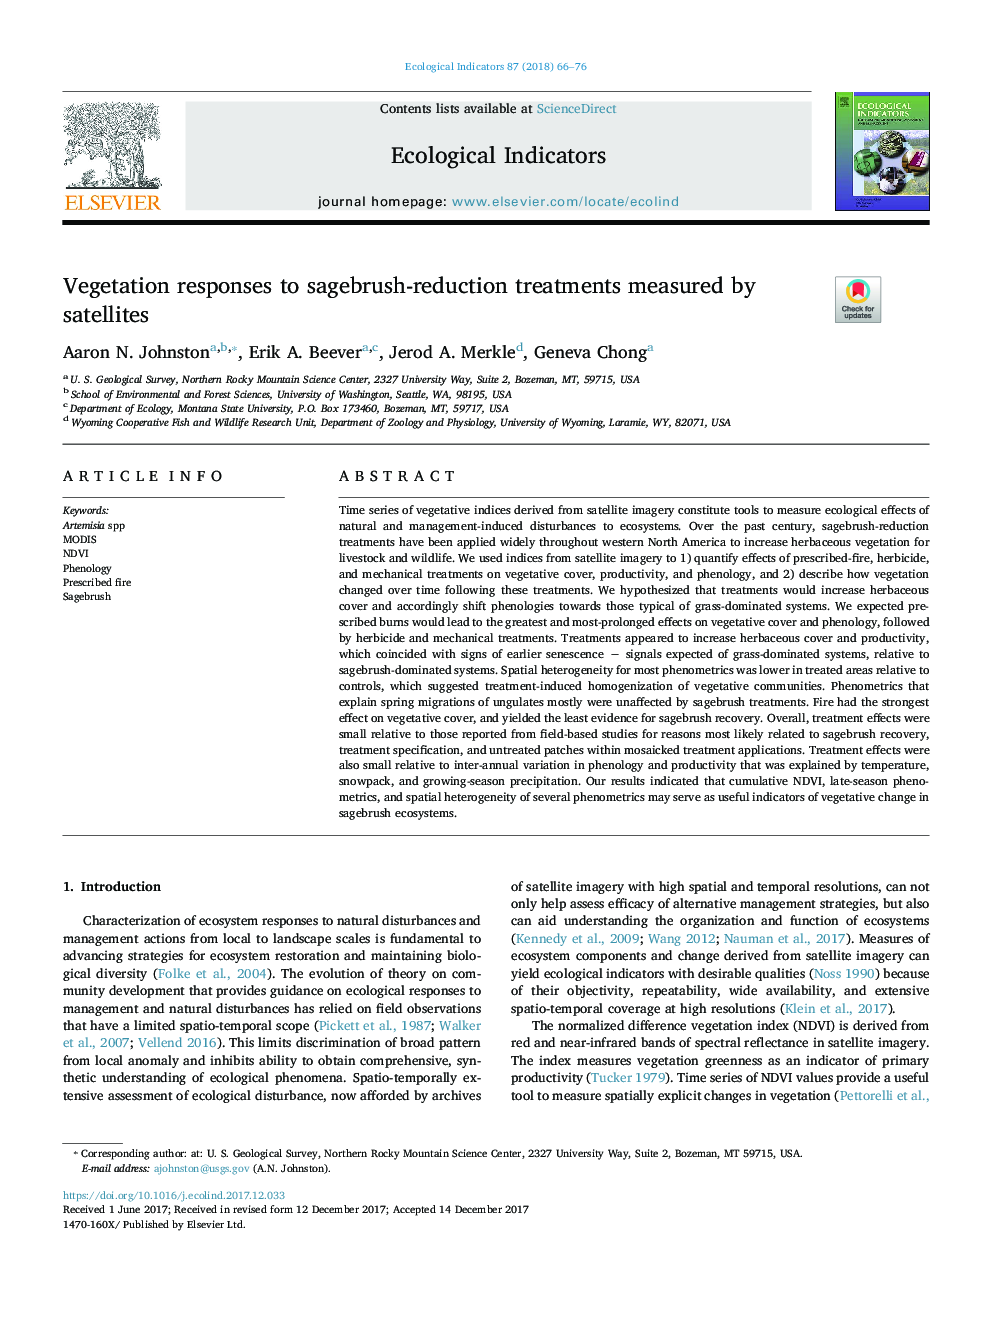 Vegetation responses to sagebrush-reduction treatments measured by satellites